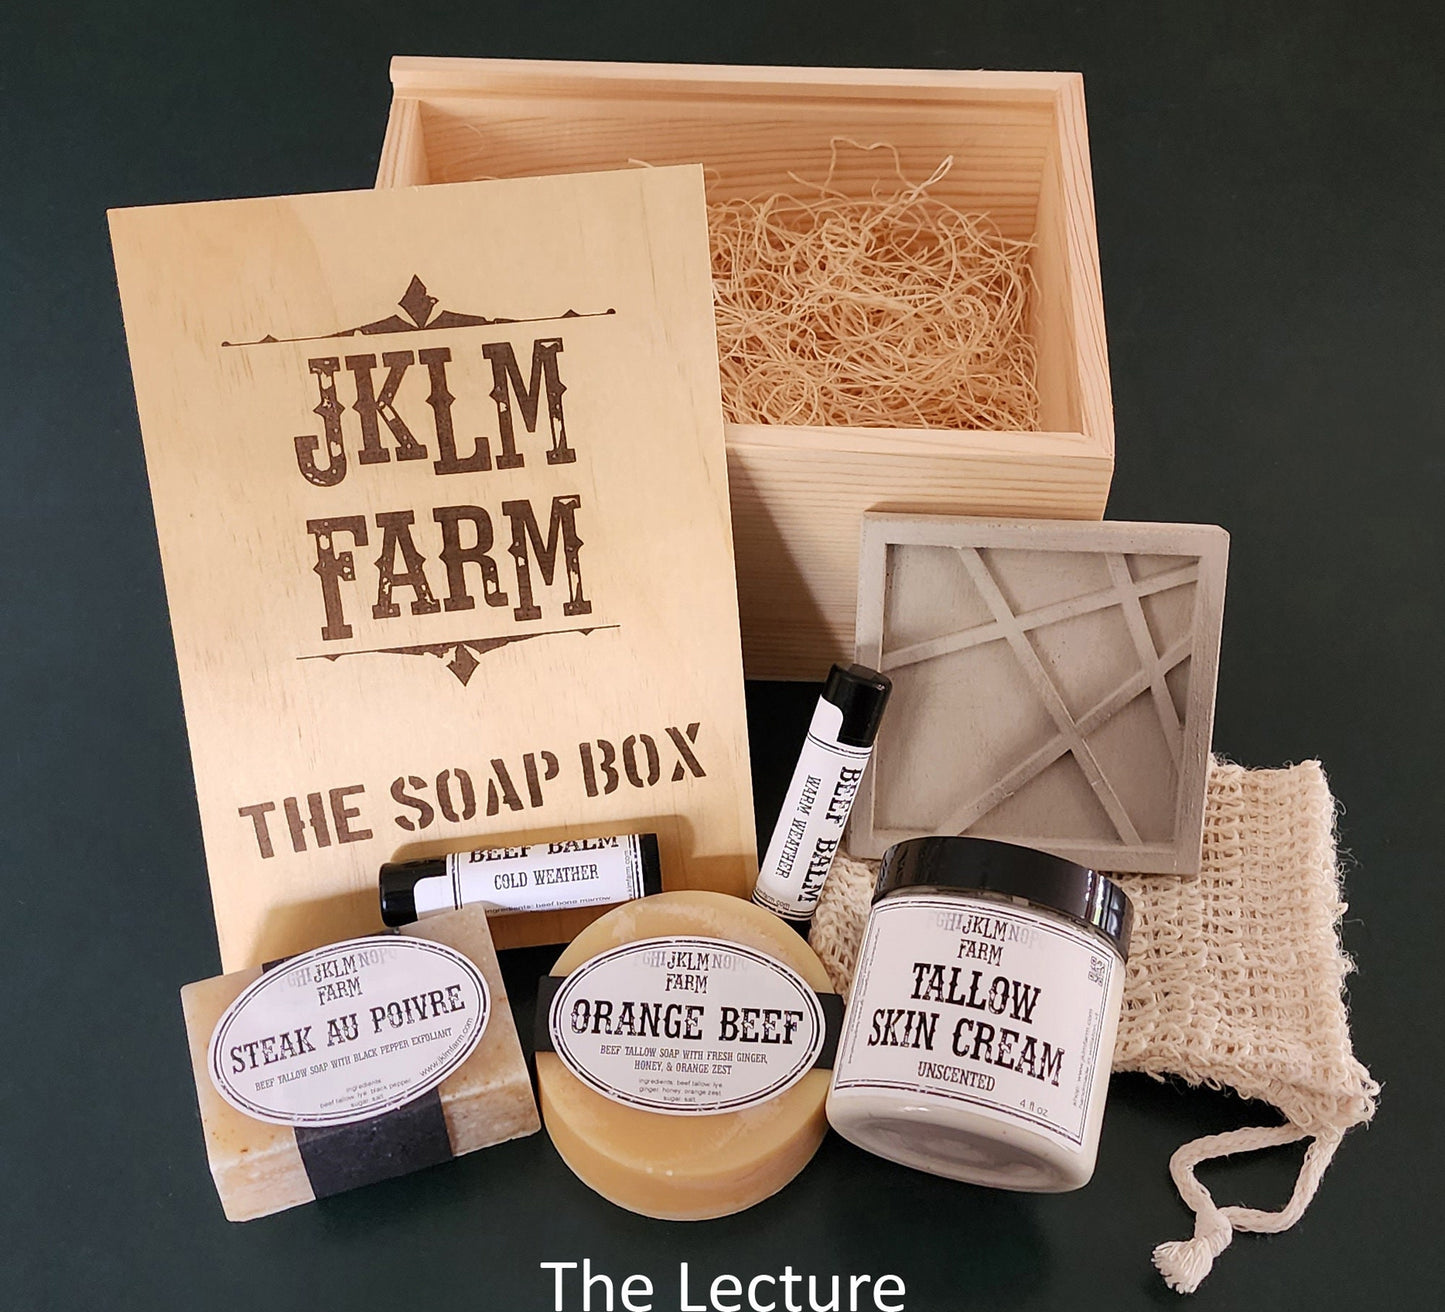 jklm farm natural organic grass-fed tallow marrow soap box gift set lecture